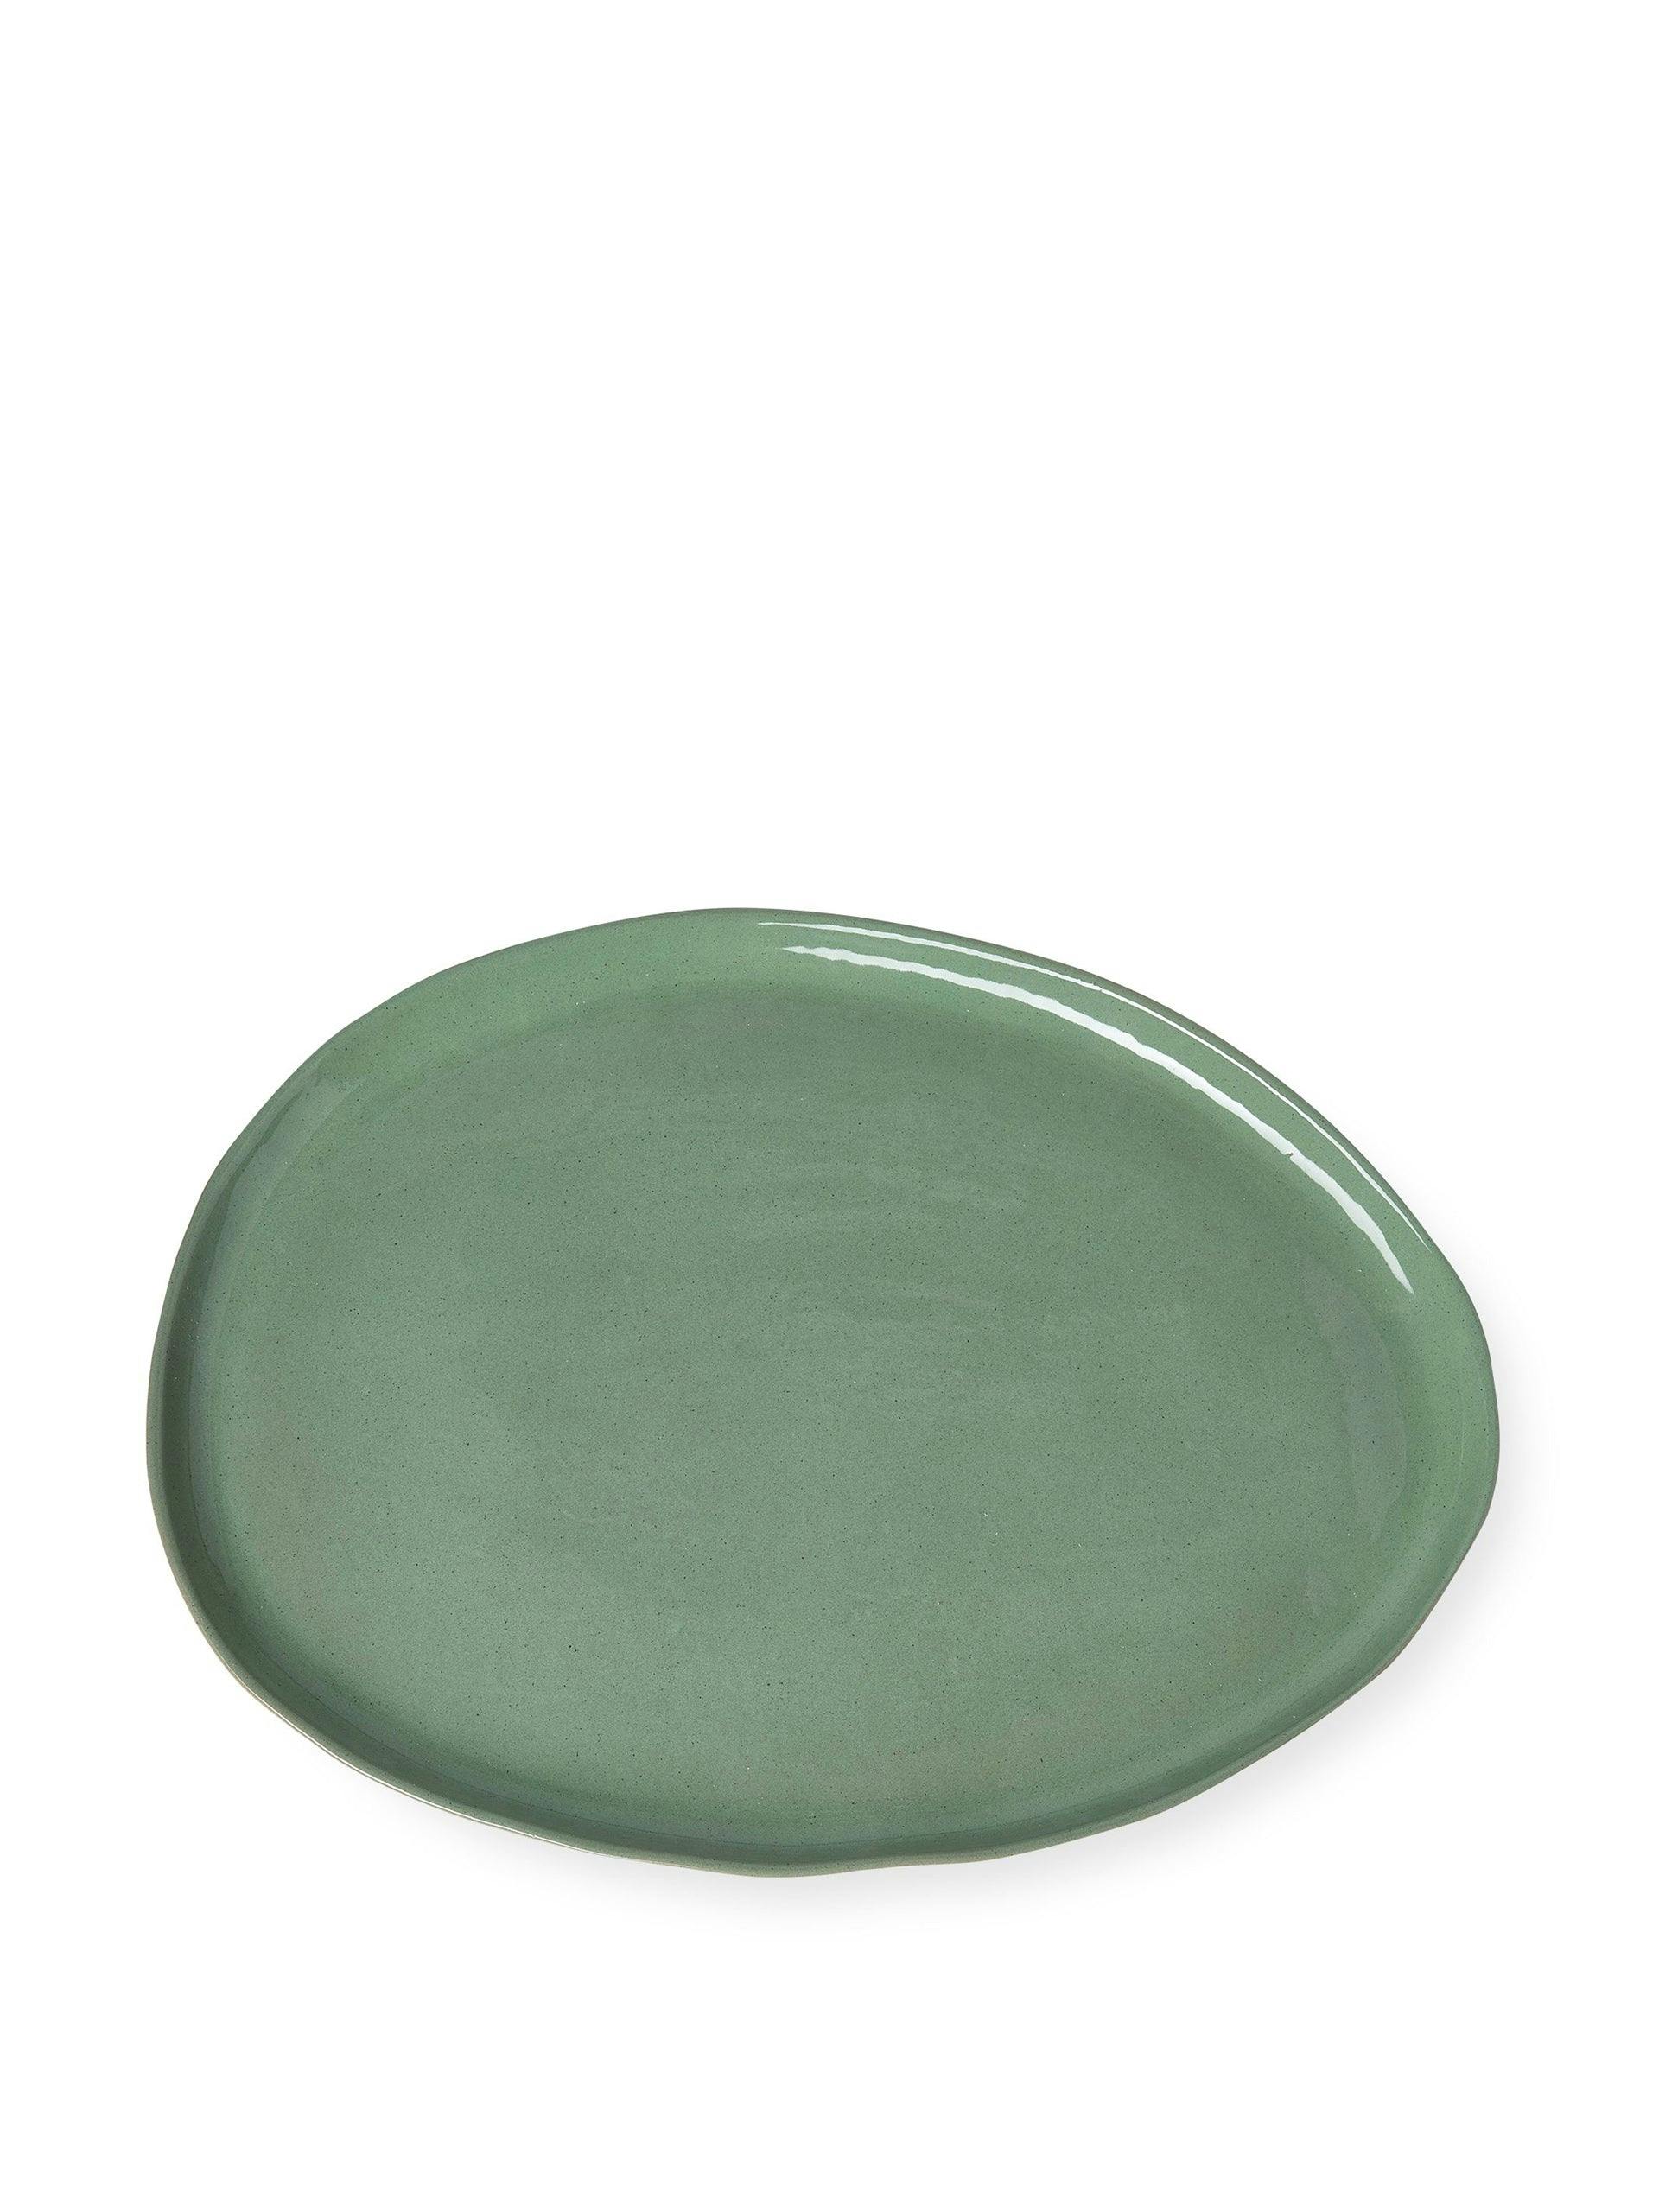 Oversized round serving platter